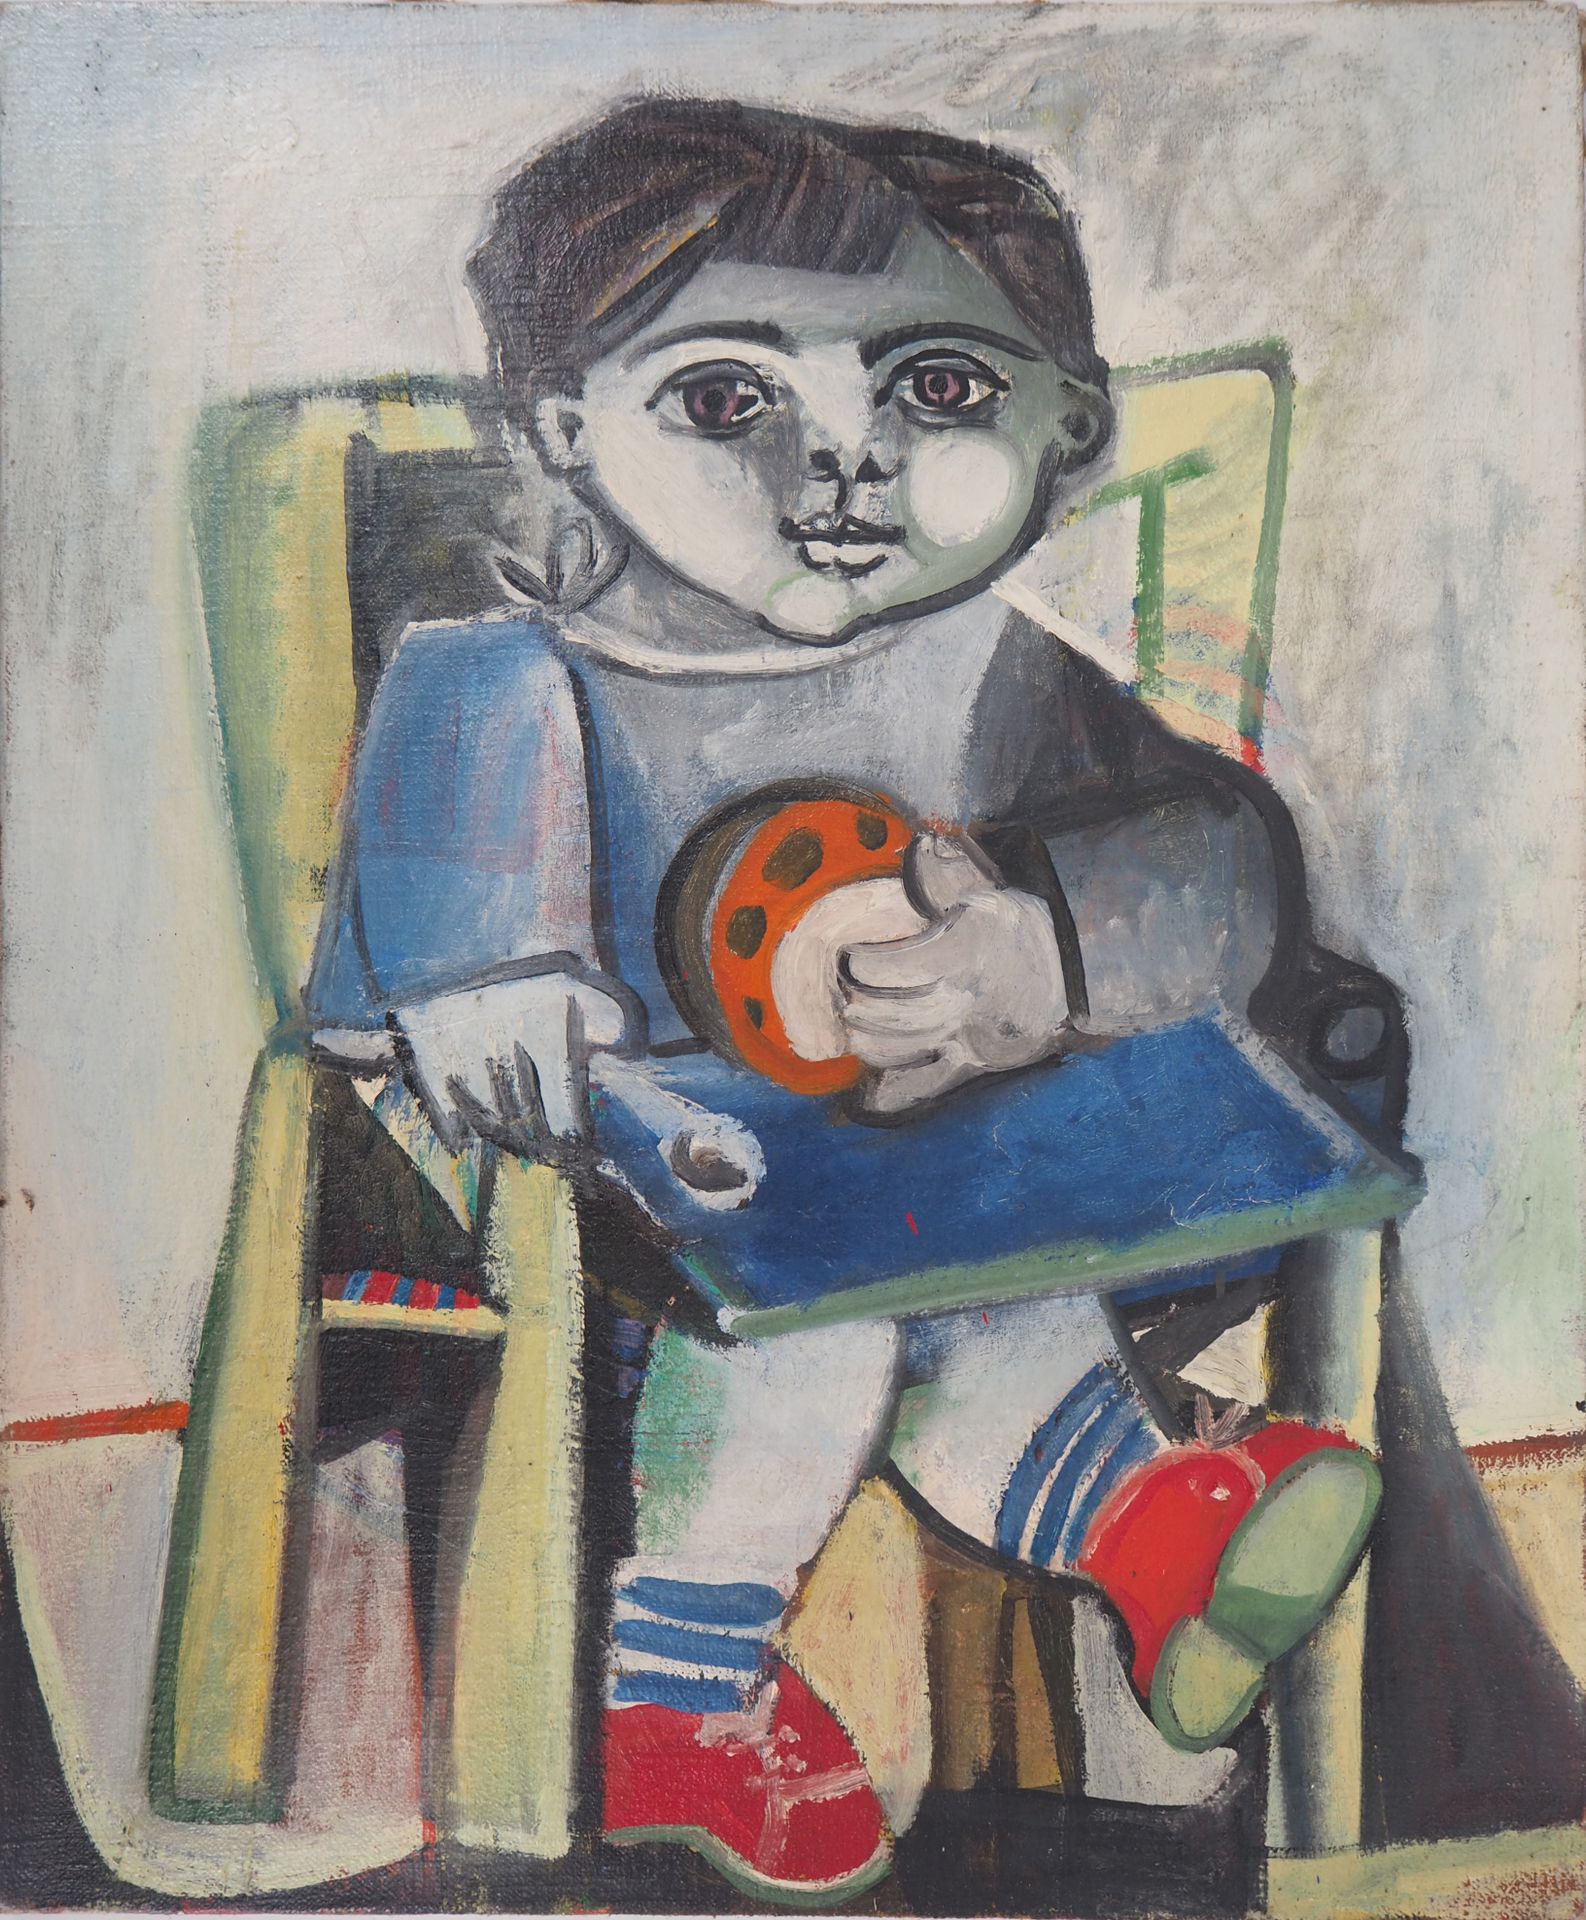 Carlos CARNERO Carlos CARNERO (1922-1980)

Hommage an Picasso: Kind auf einem St&hellip;